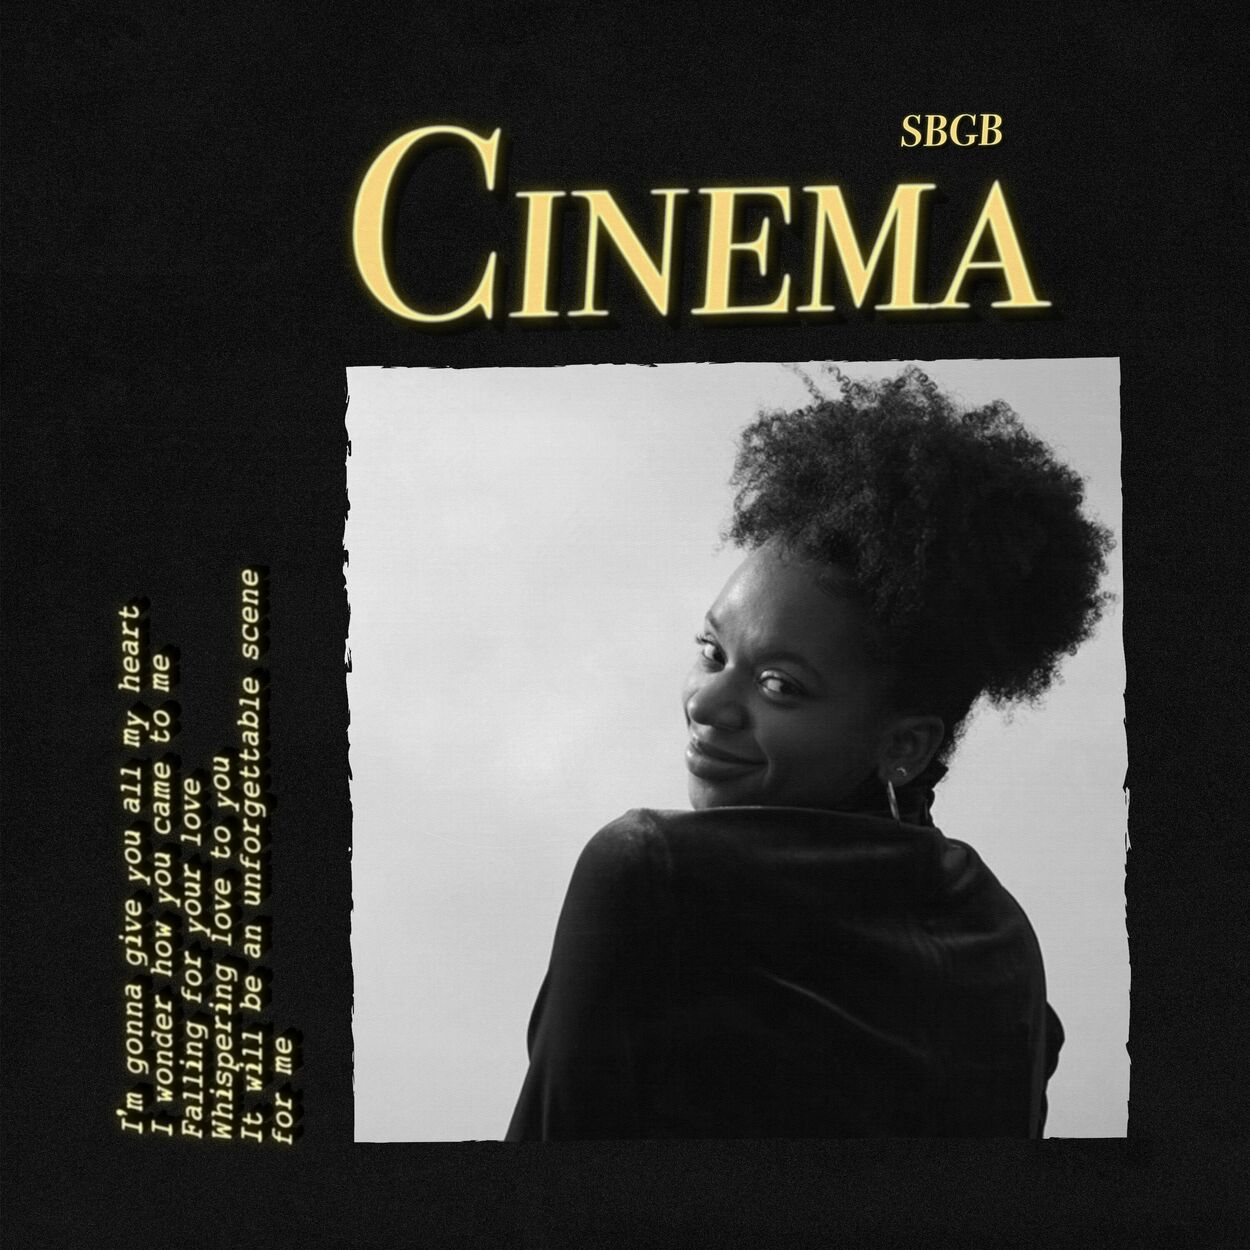 SBGB – Cinema – Single